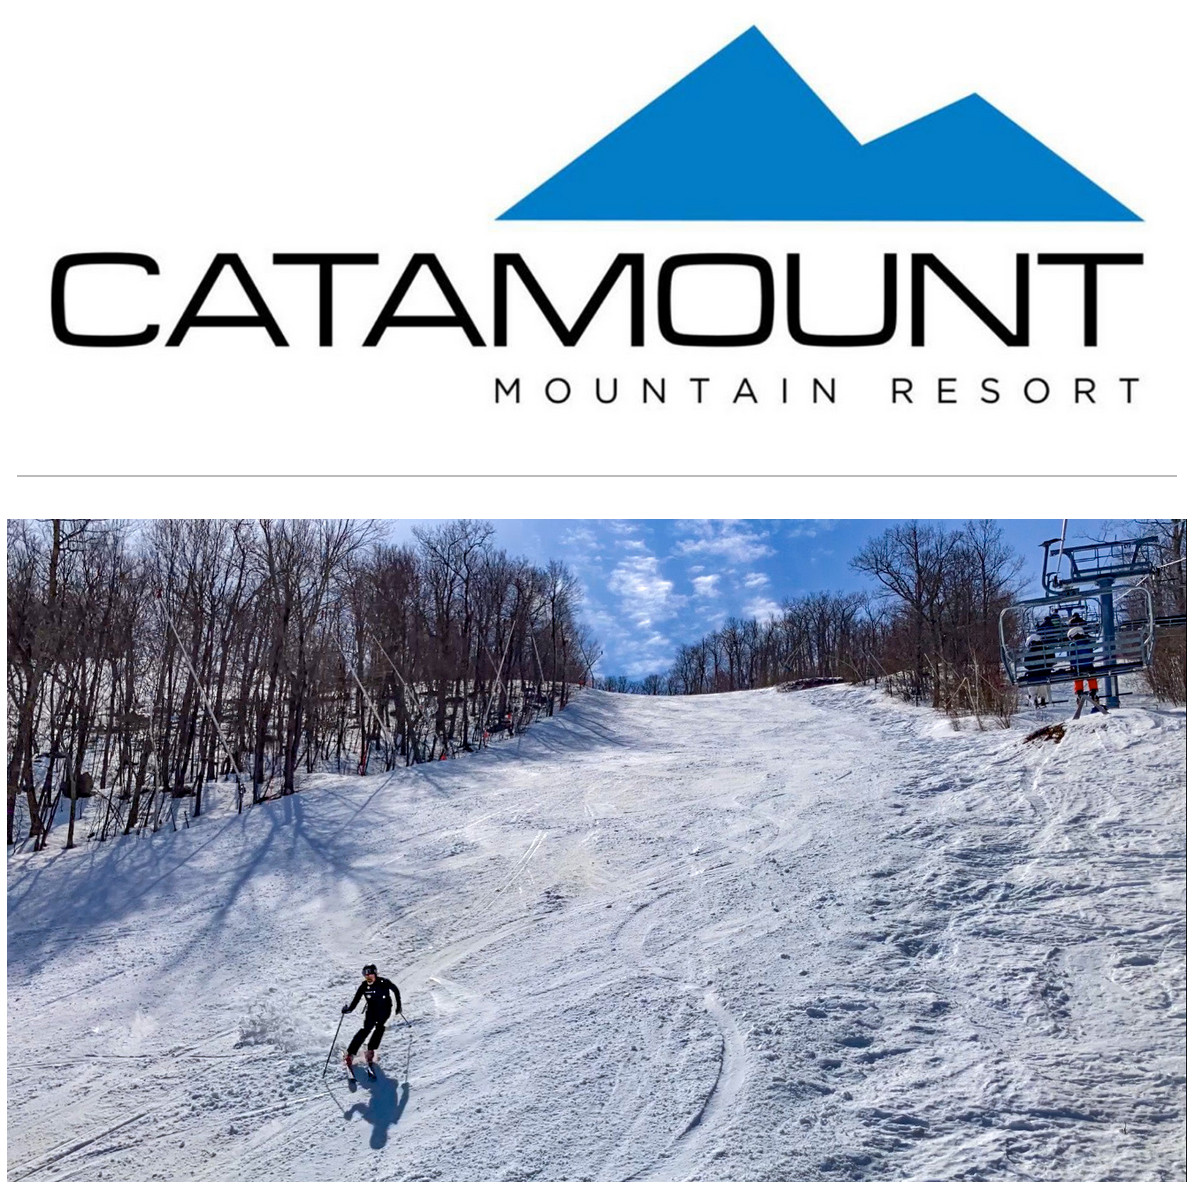 Catamount Skier and Logo